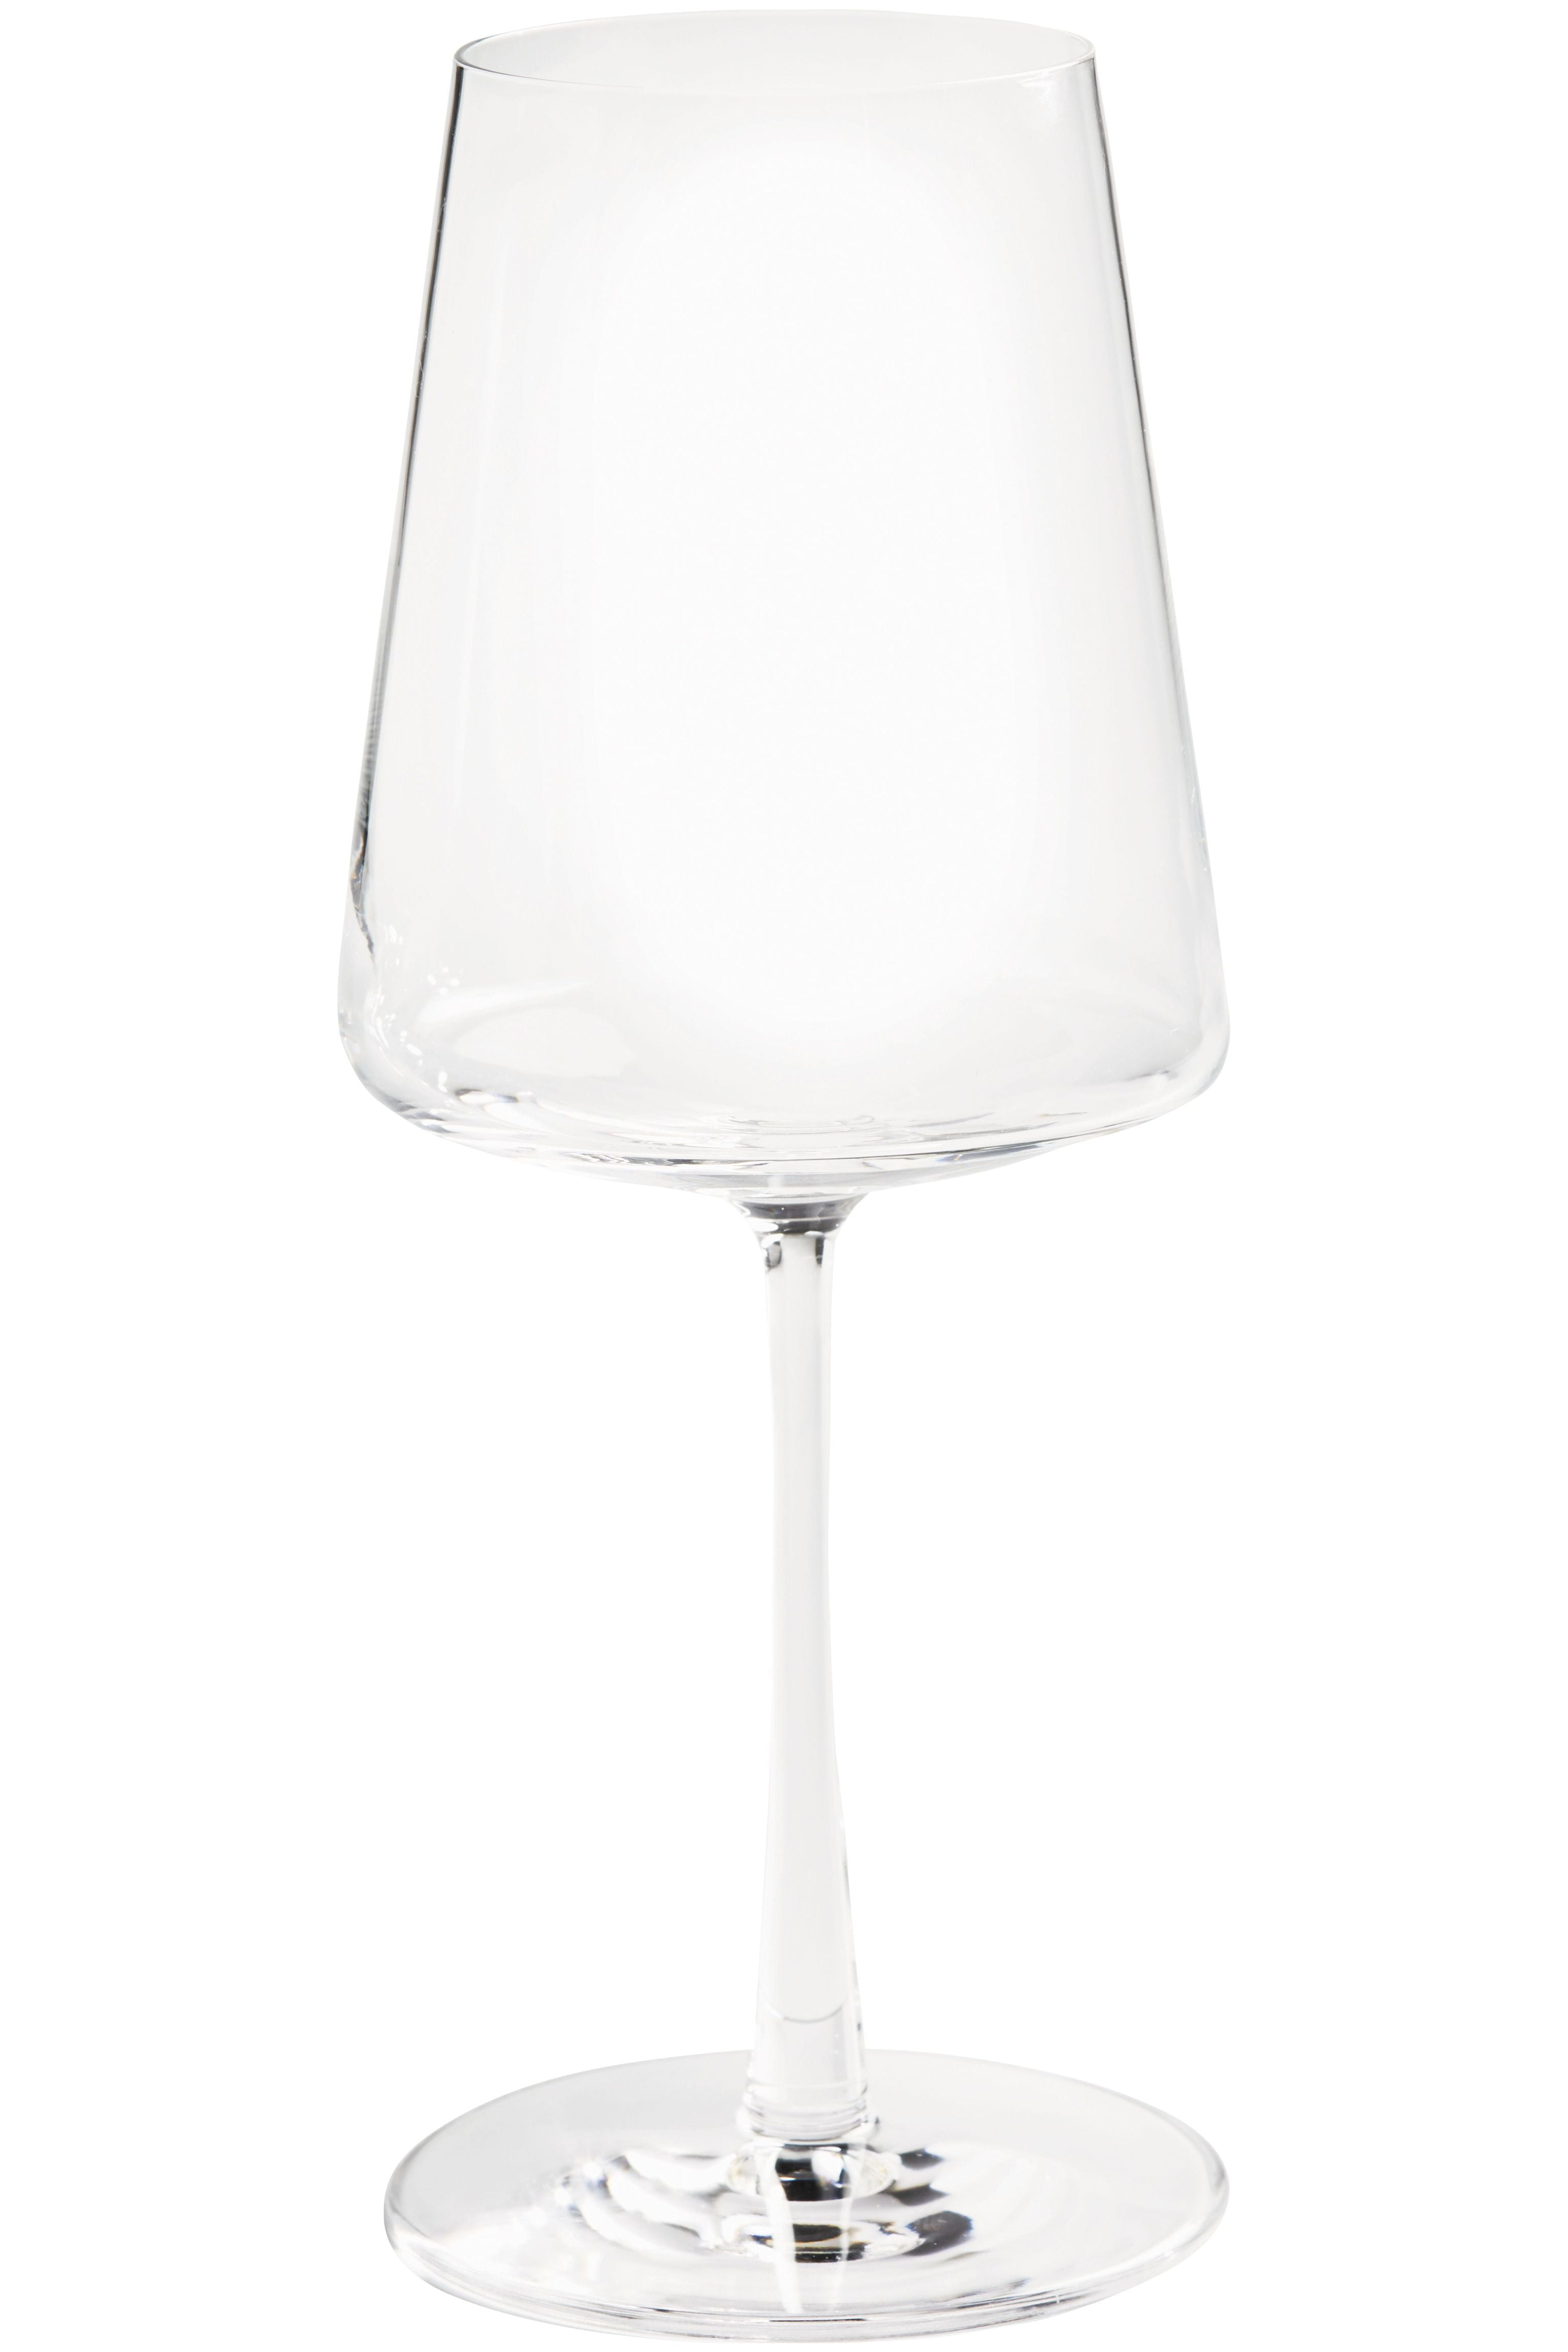 Ultra Thin Angular Glasses - Exquisite Wine Experience